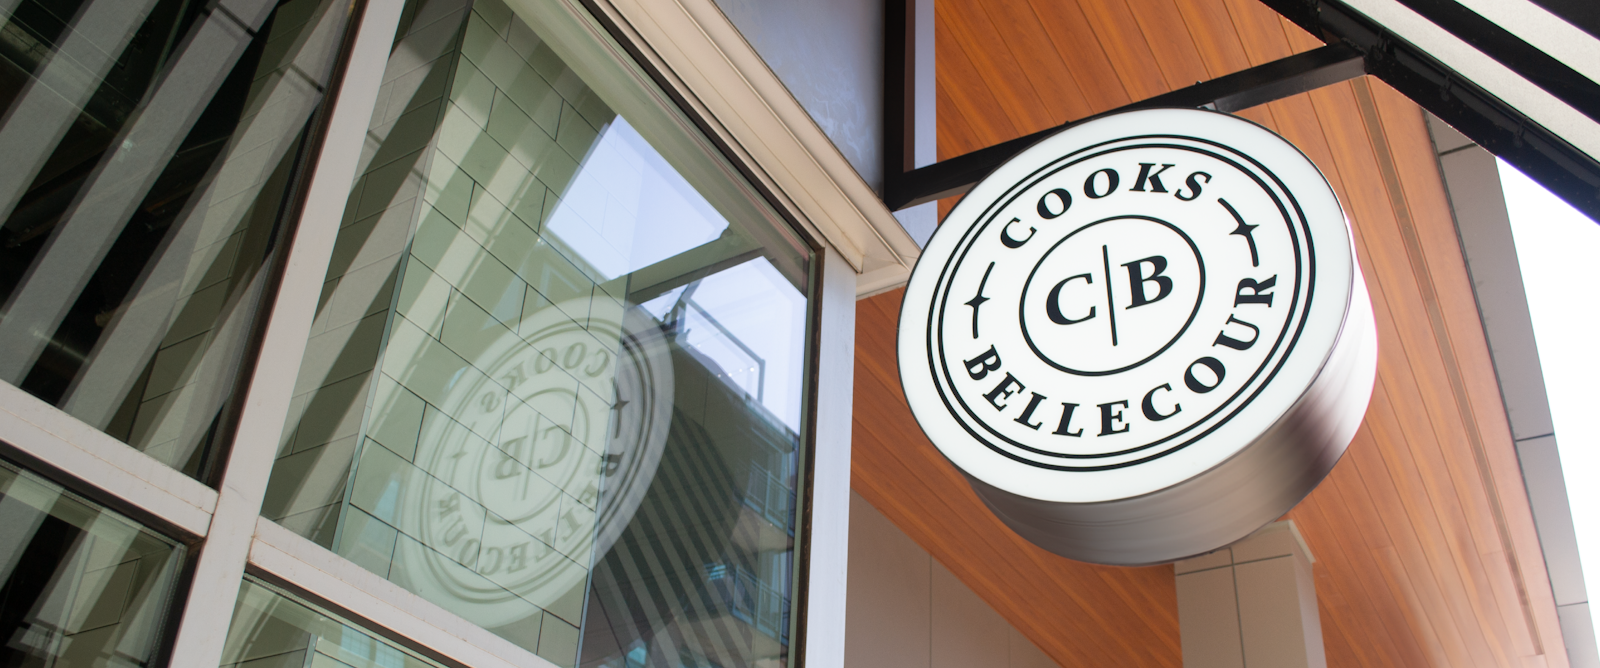 A Cooks | Bellecour logo mark on a storefront sign.